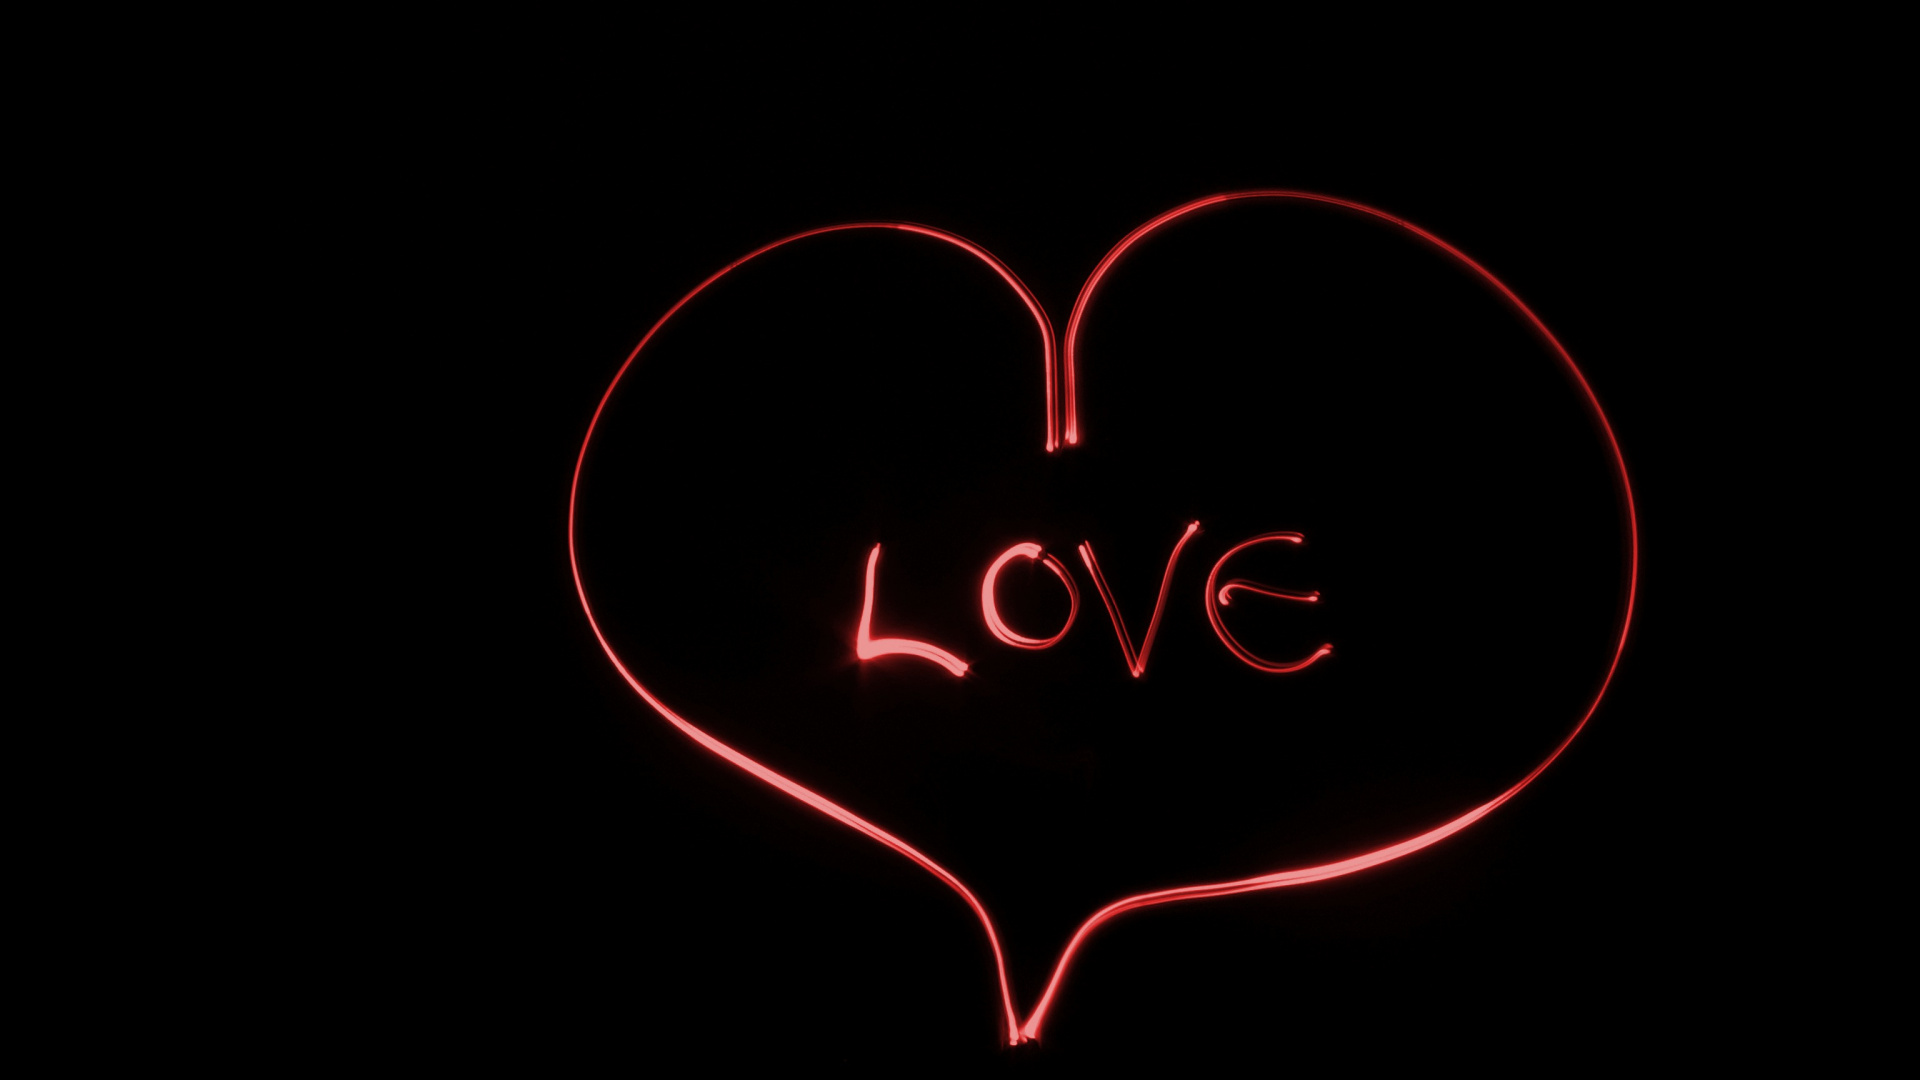 Love, Heart, Text, Red, Organ. Wallpaper in 1920x1080 Resolution